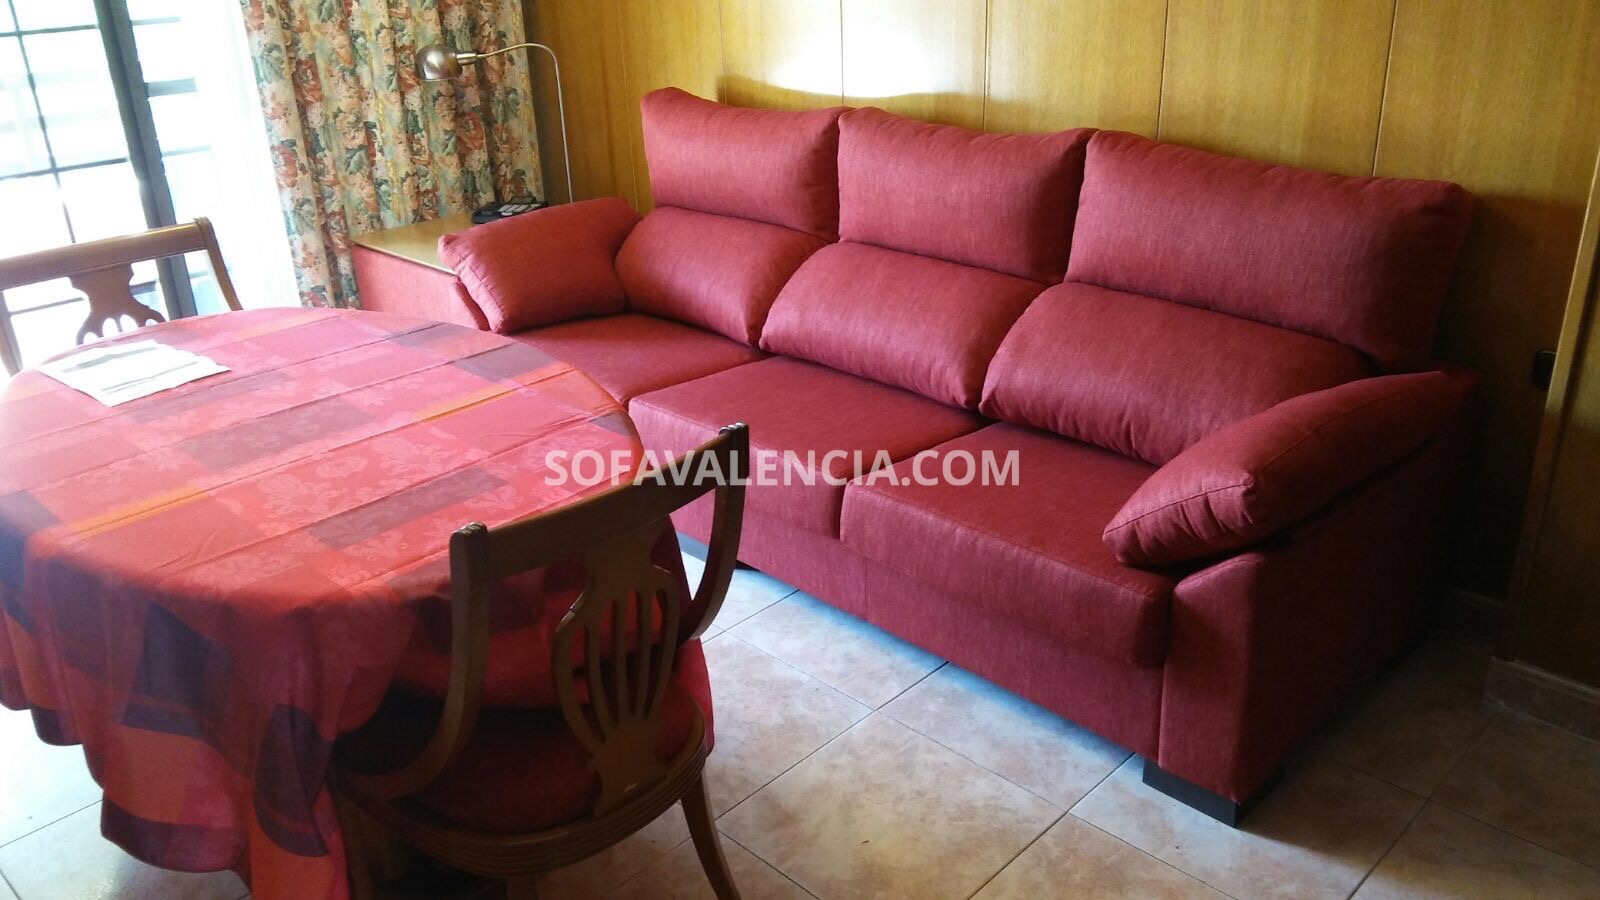 sofa-valencia-fotos-clientes-76